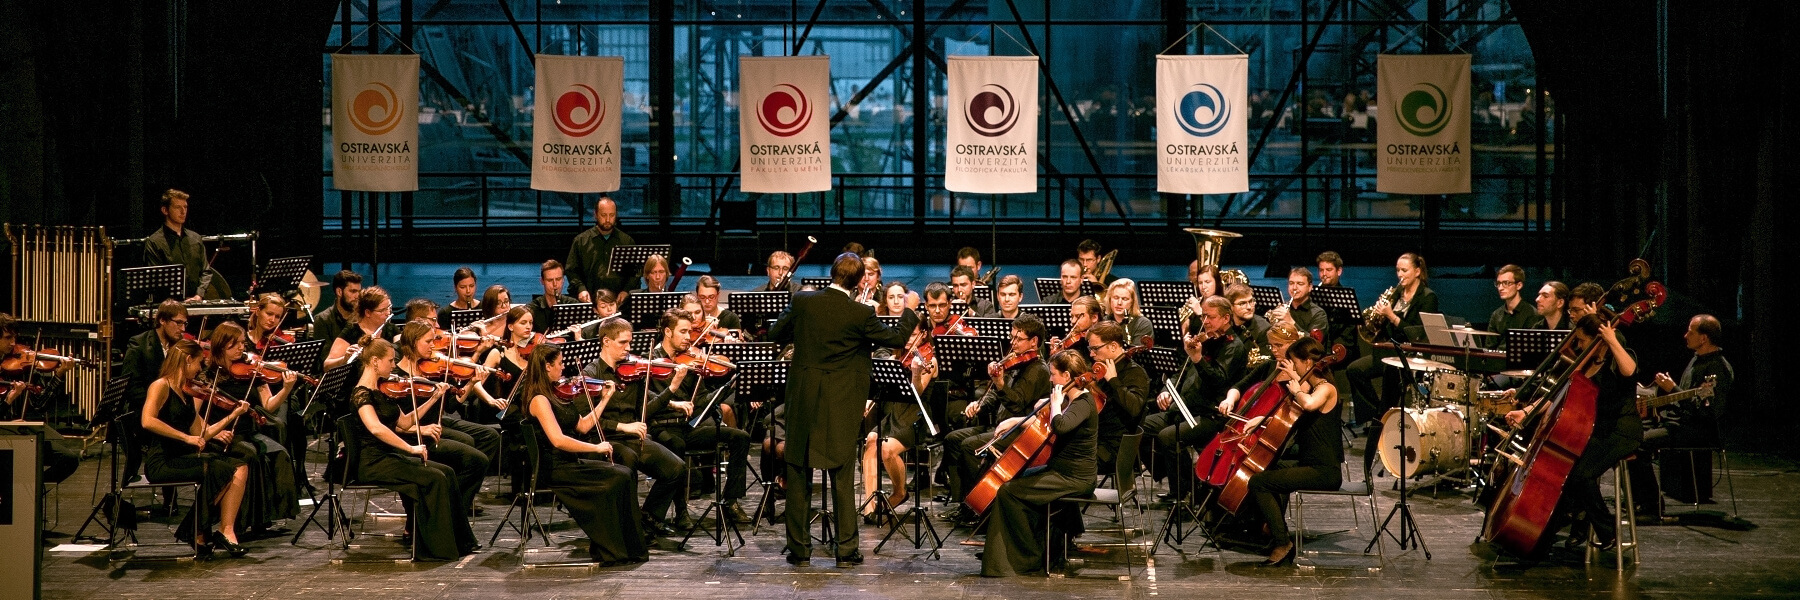 University of Ostrava orchestra